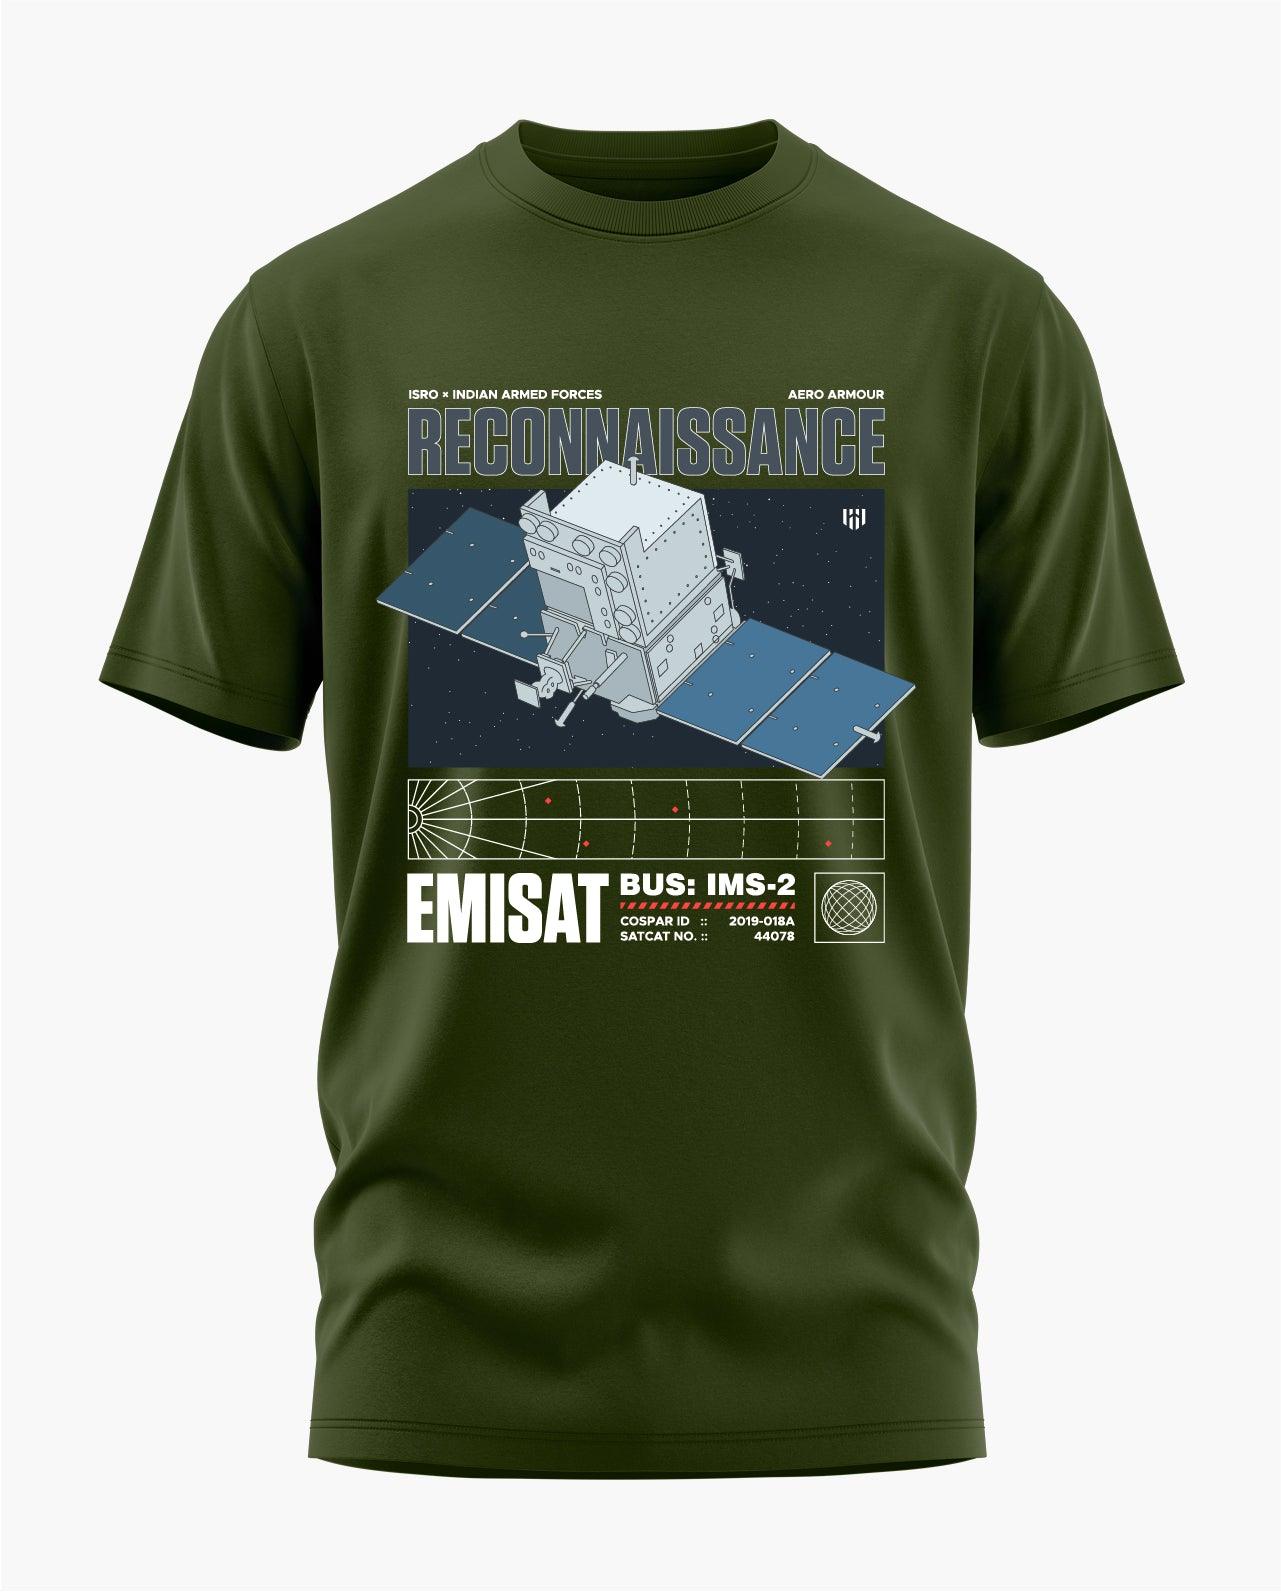 Recon Emisat T-Shirt - Aero Armour